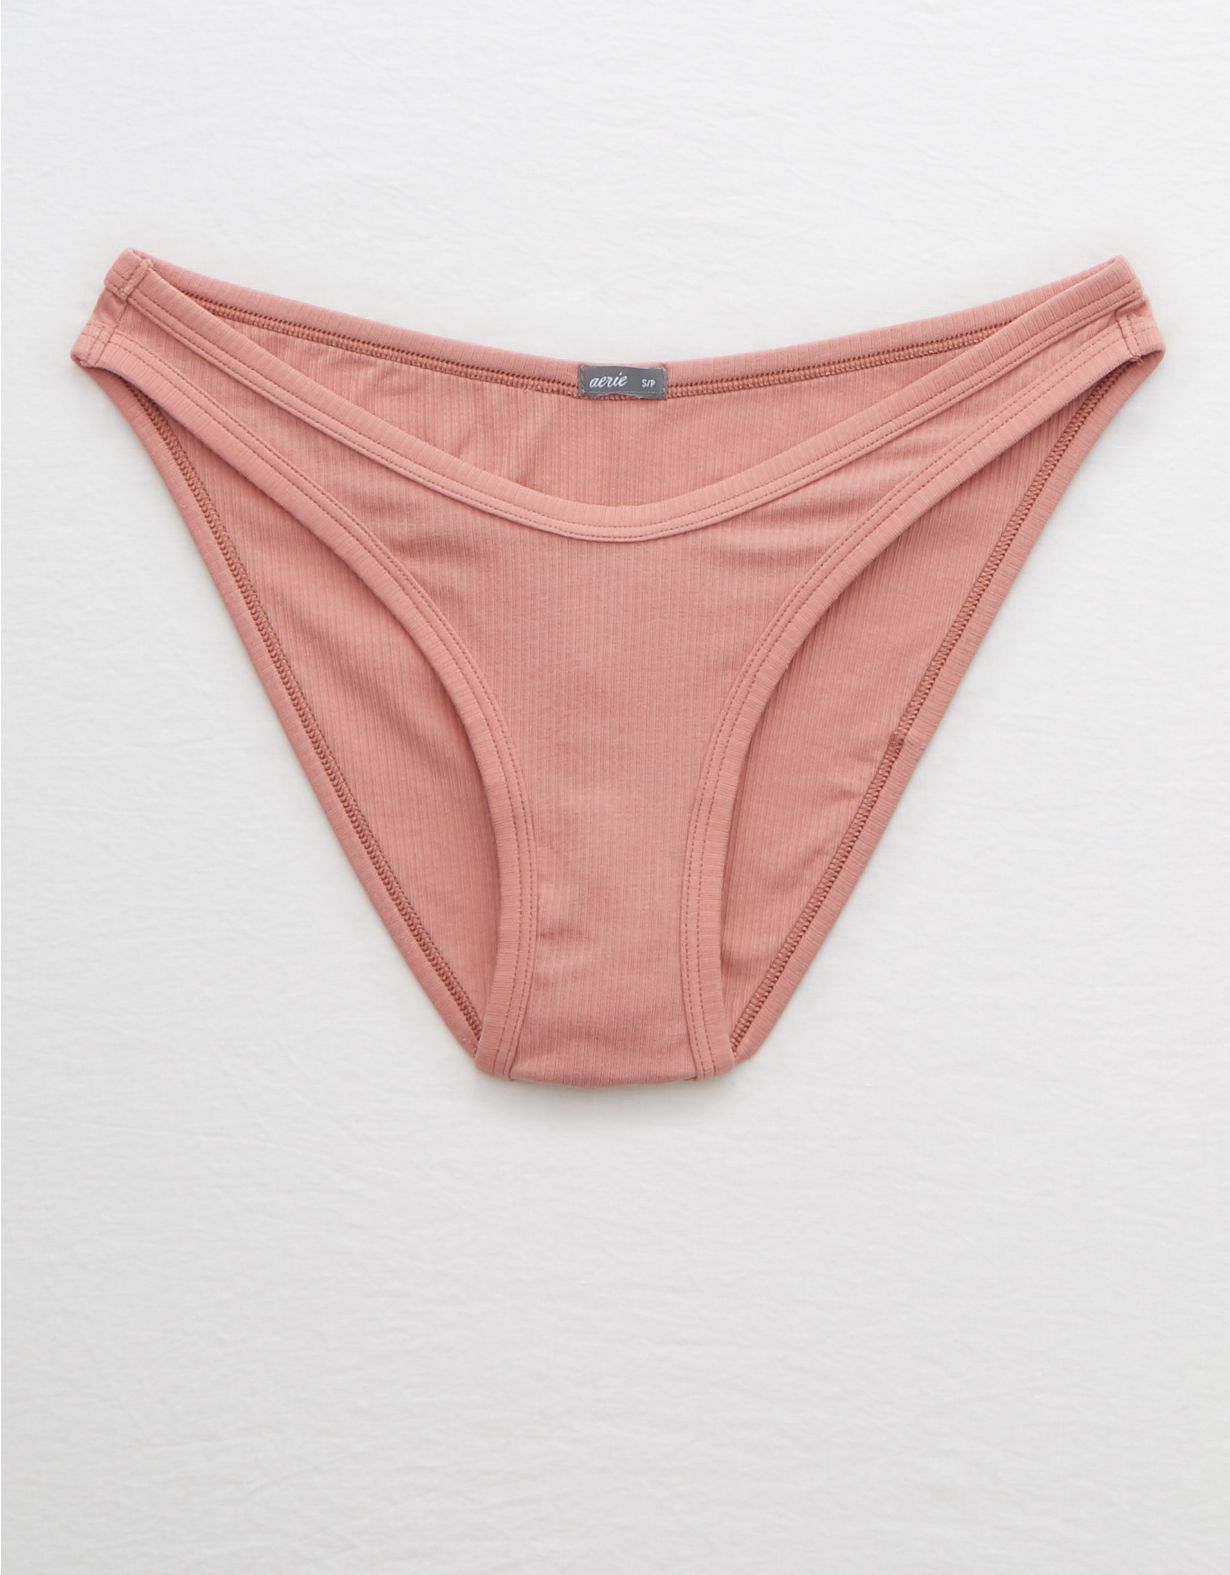 Aerie Ribbed High Cut Bikini Underwear